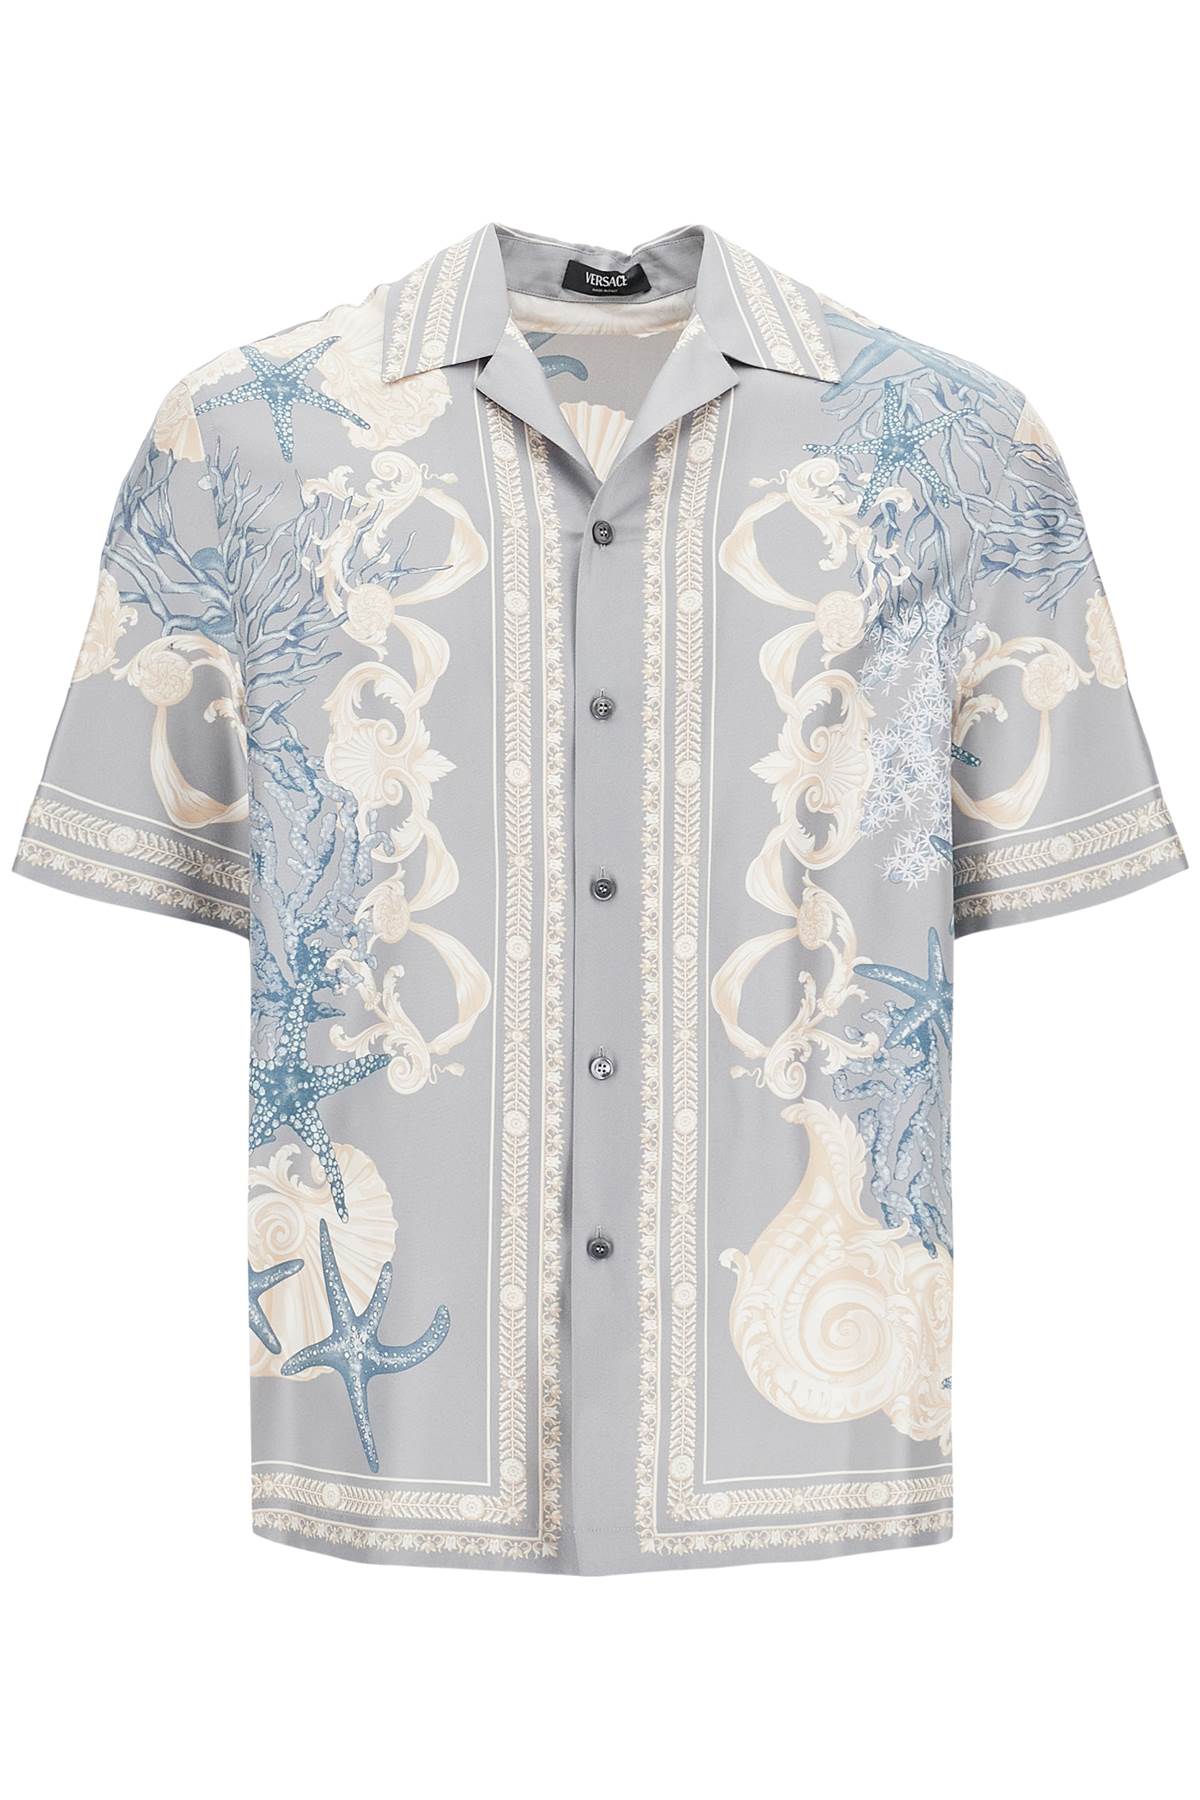 Versace VERSACE baroque printed silk bowling shirt set for the